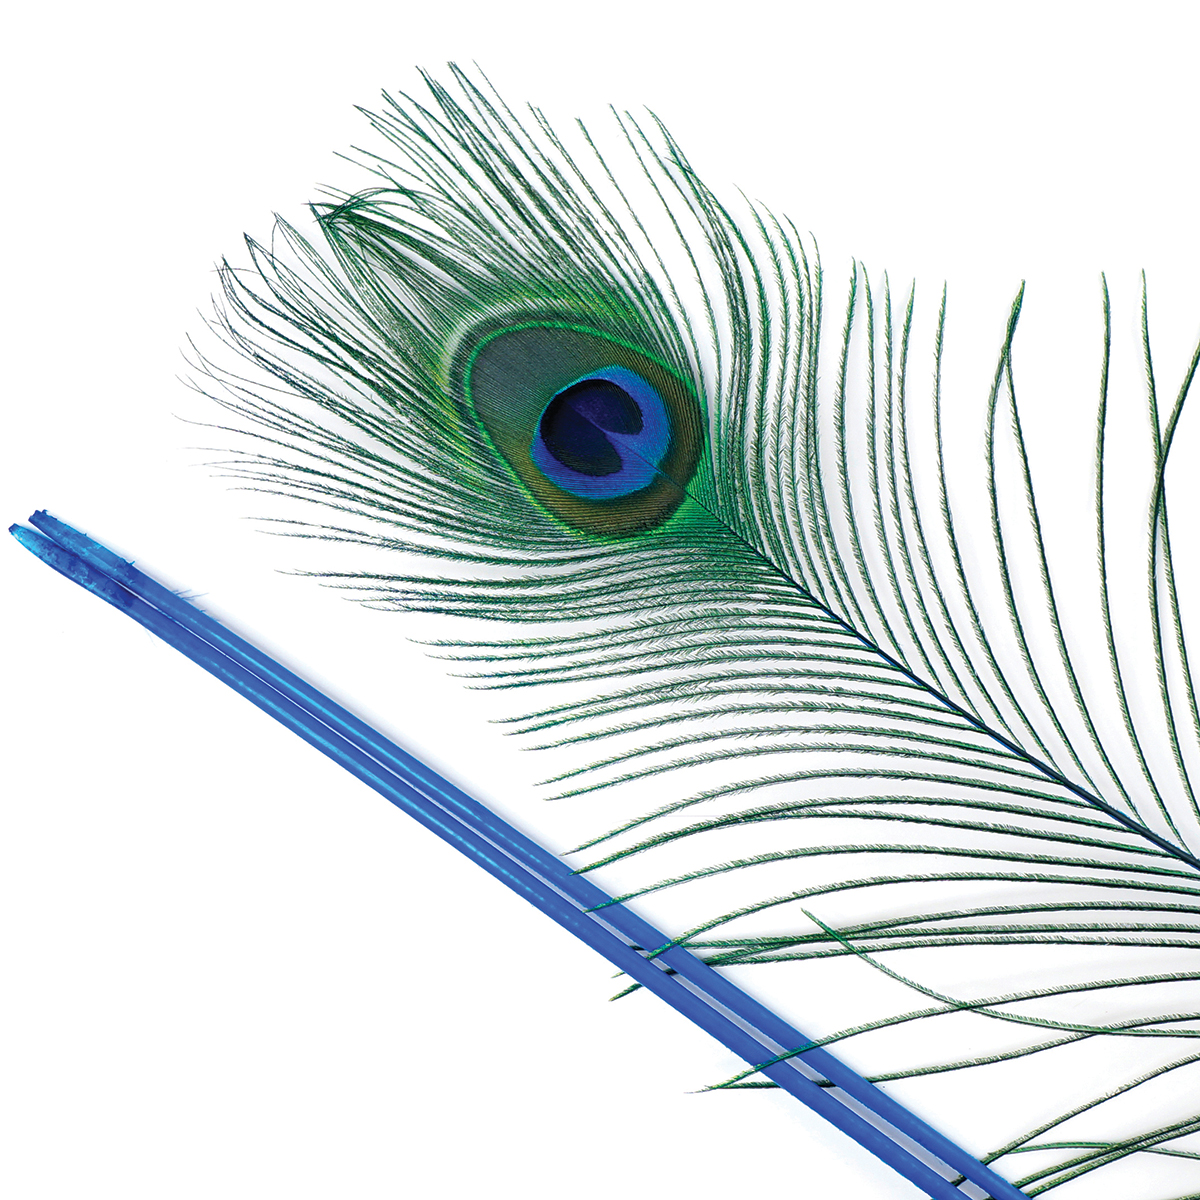 Peacock Eye 30"-40" Stem Dyed 10/Pkg-Dark Turquoise - image 1 of 2